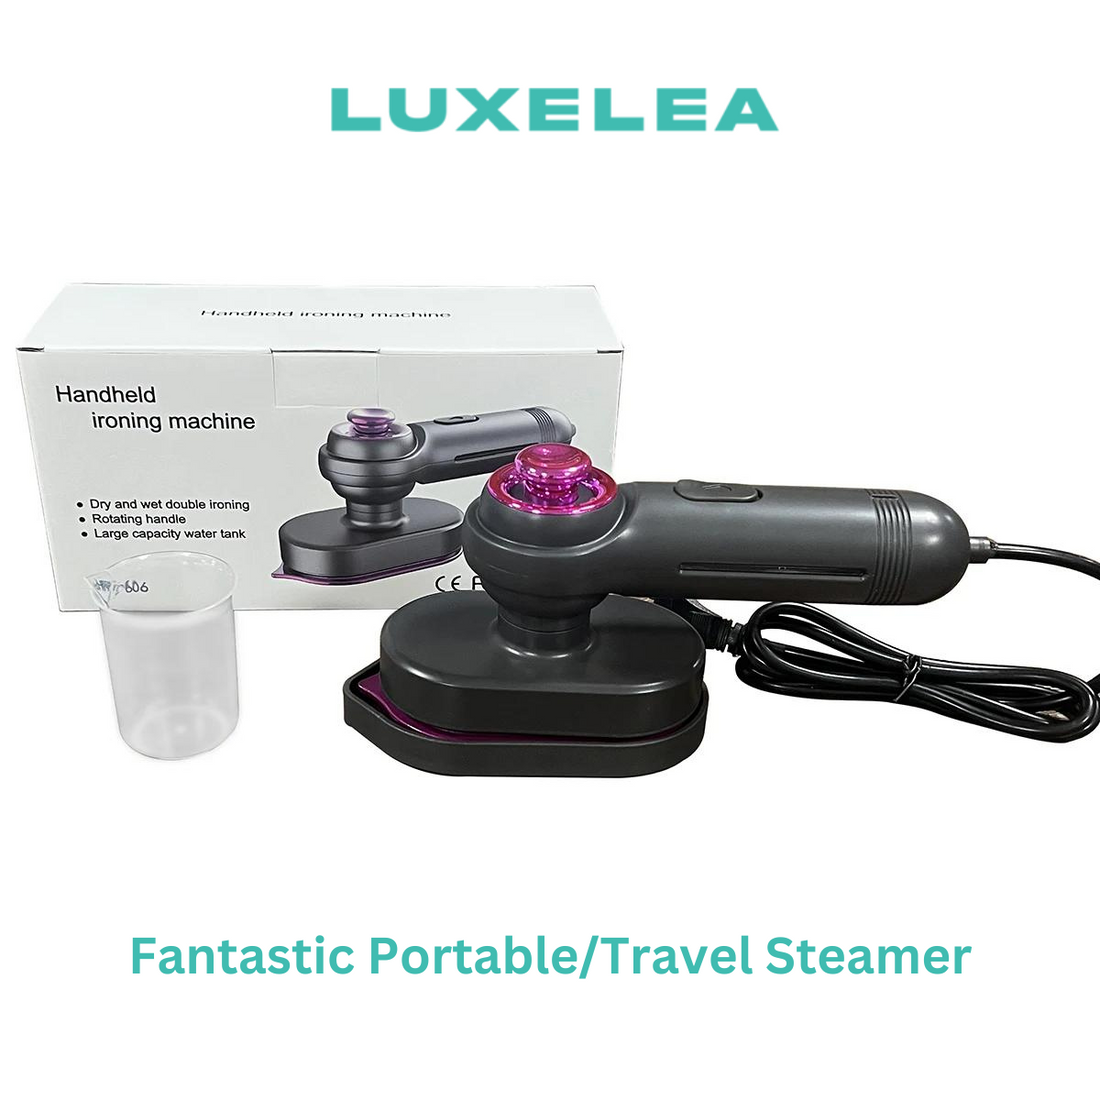 Fantastic Portable/Travel Steamer